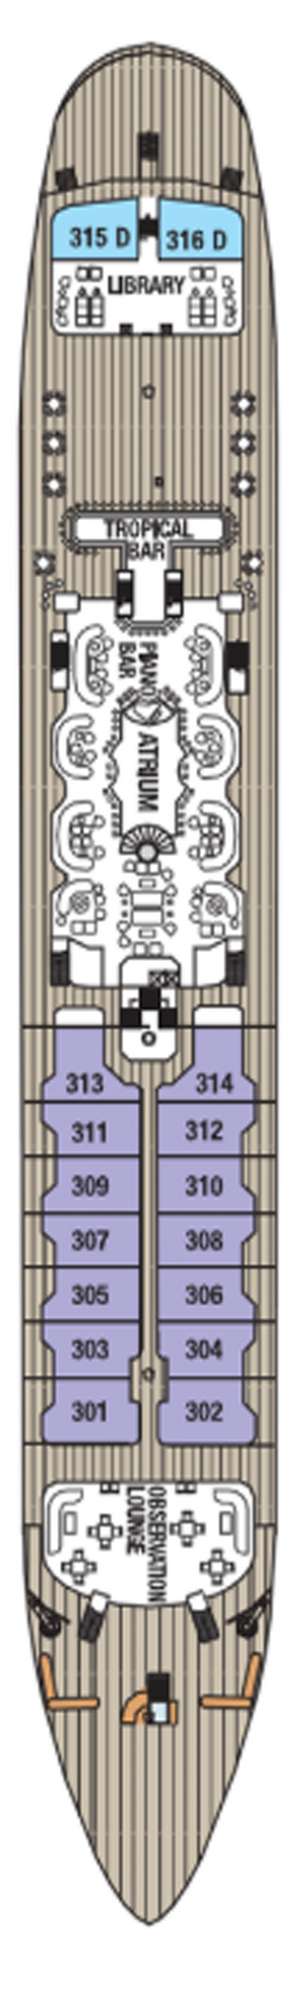 Deck plan for Royal Clipper